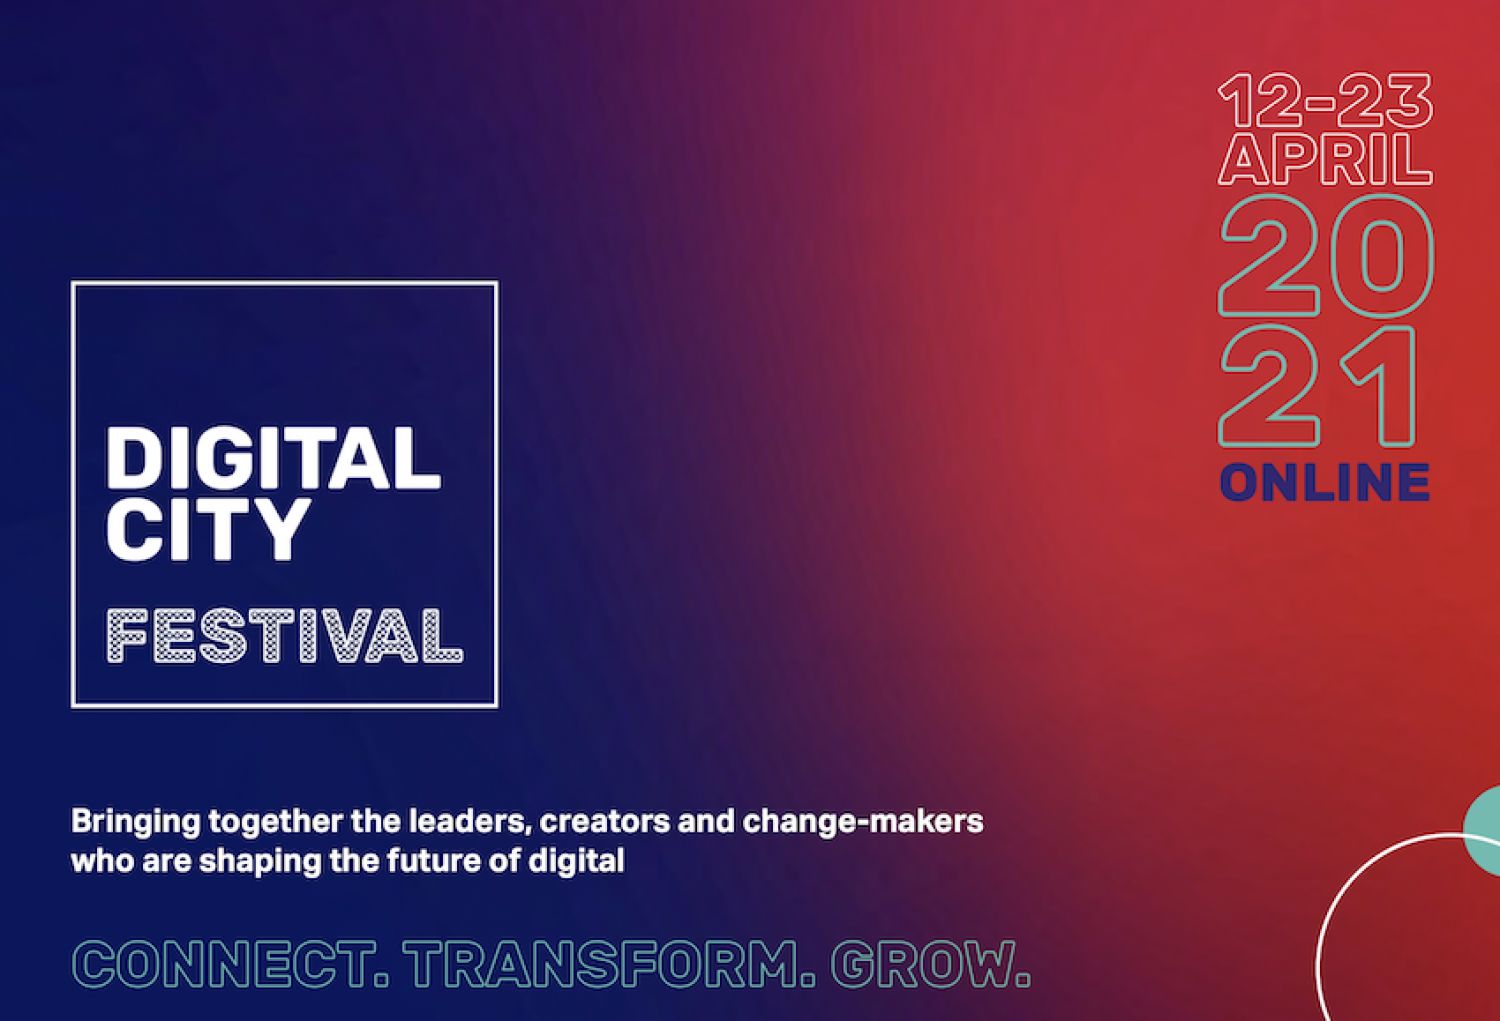 The Digital City Festival 